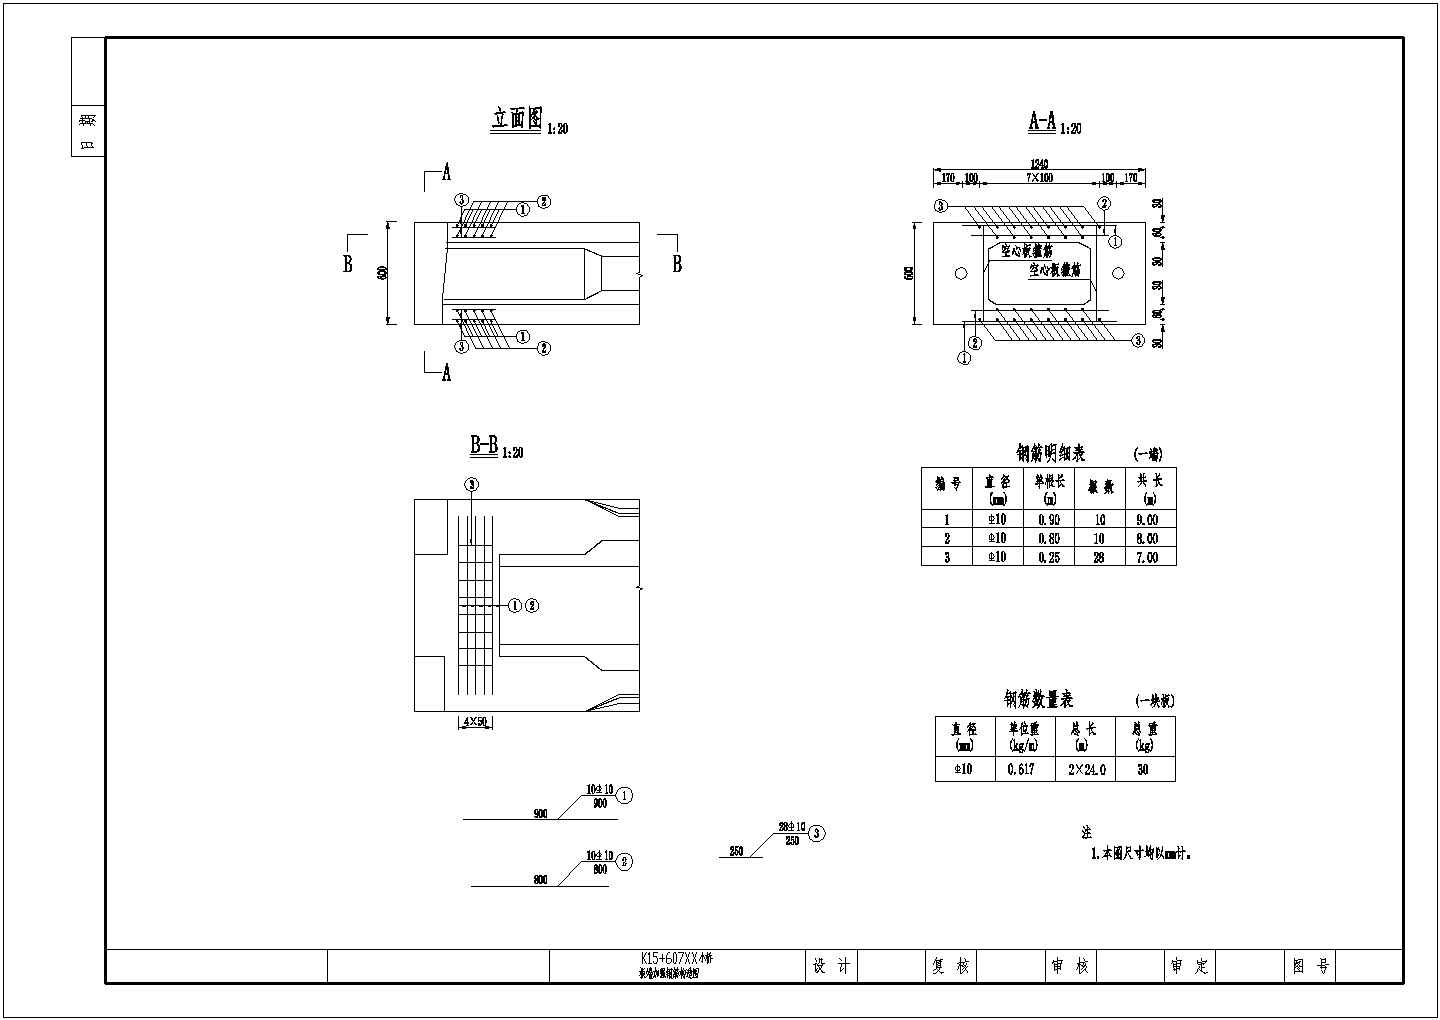 2×10m预应力混凝土简支空心板桥简支板施工图设计